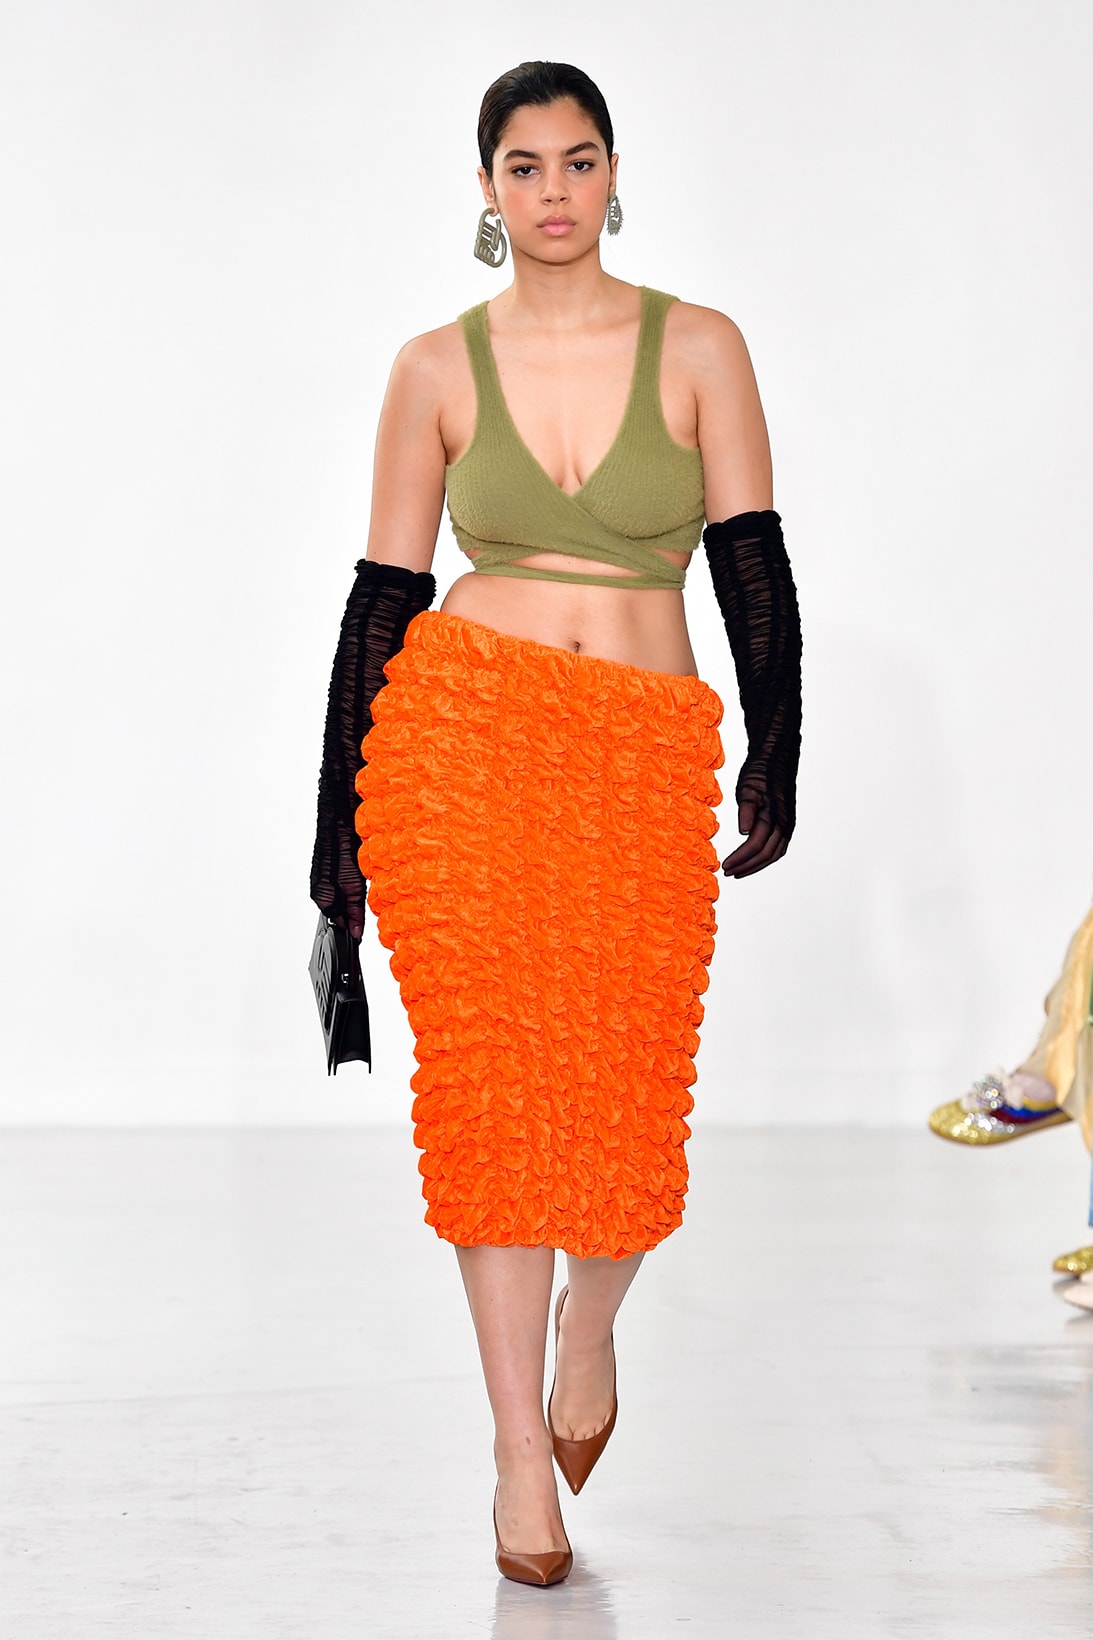 Ester Manas Fall Winter Collection Size Inclusivity Cut-Outs Fashion Week Runway Show Photos Bra Top Dress Green Orange